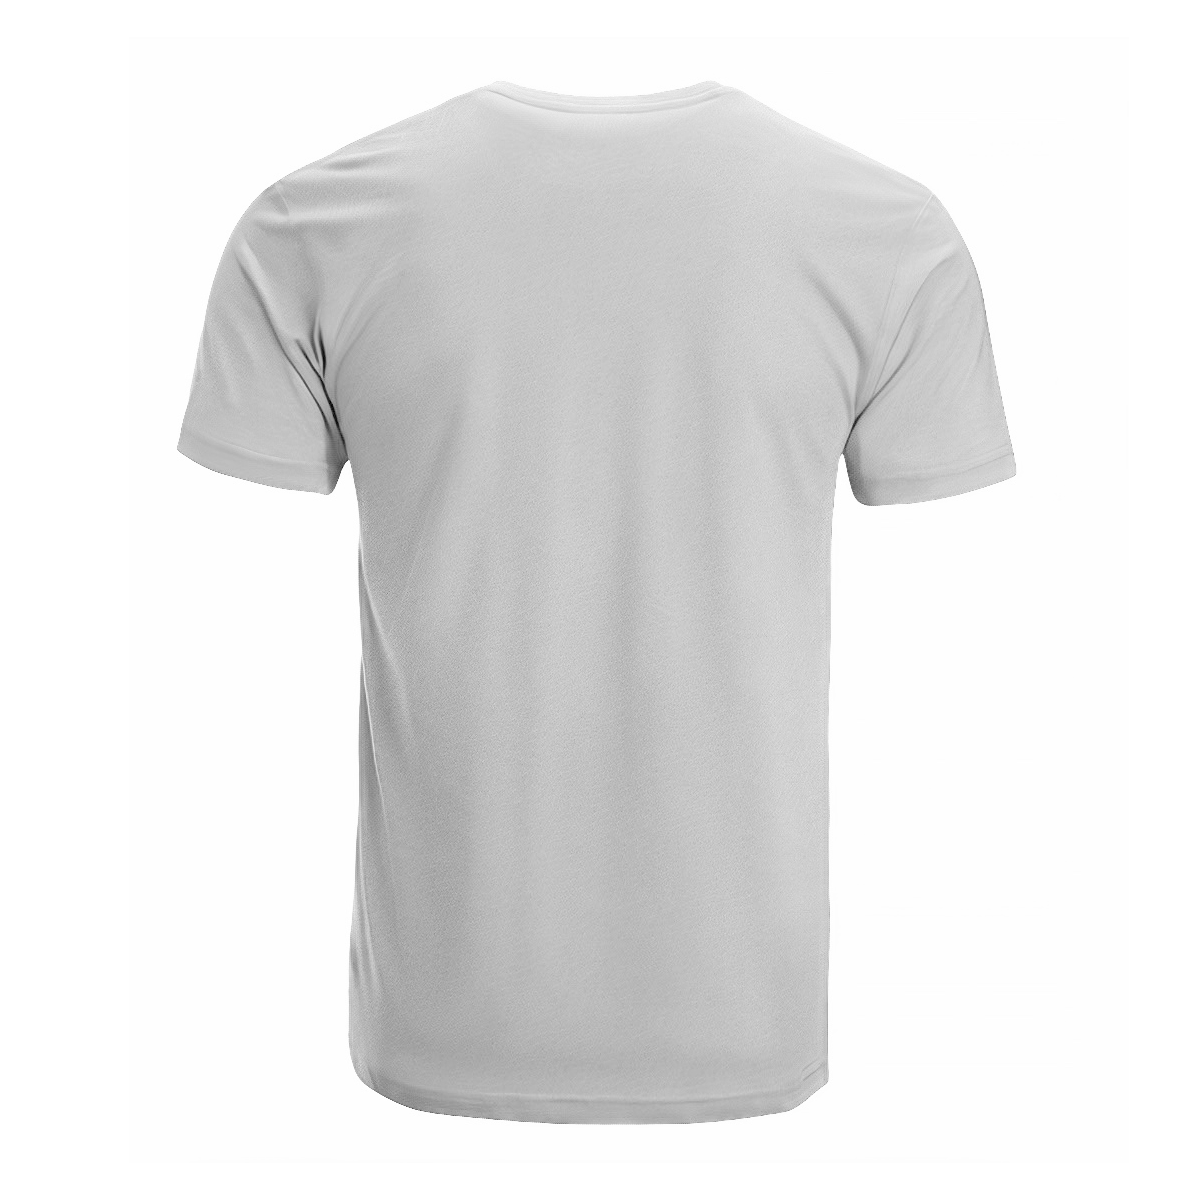 Mowat Tartan Crest T-shirt - I'm not yelling style